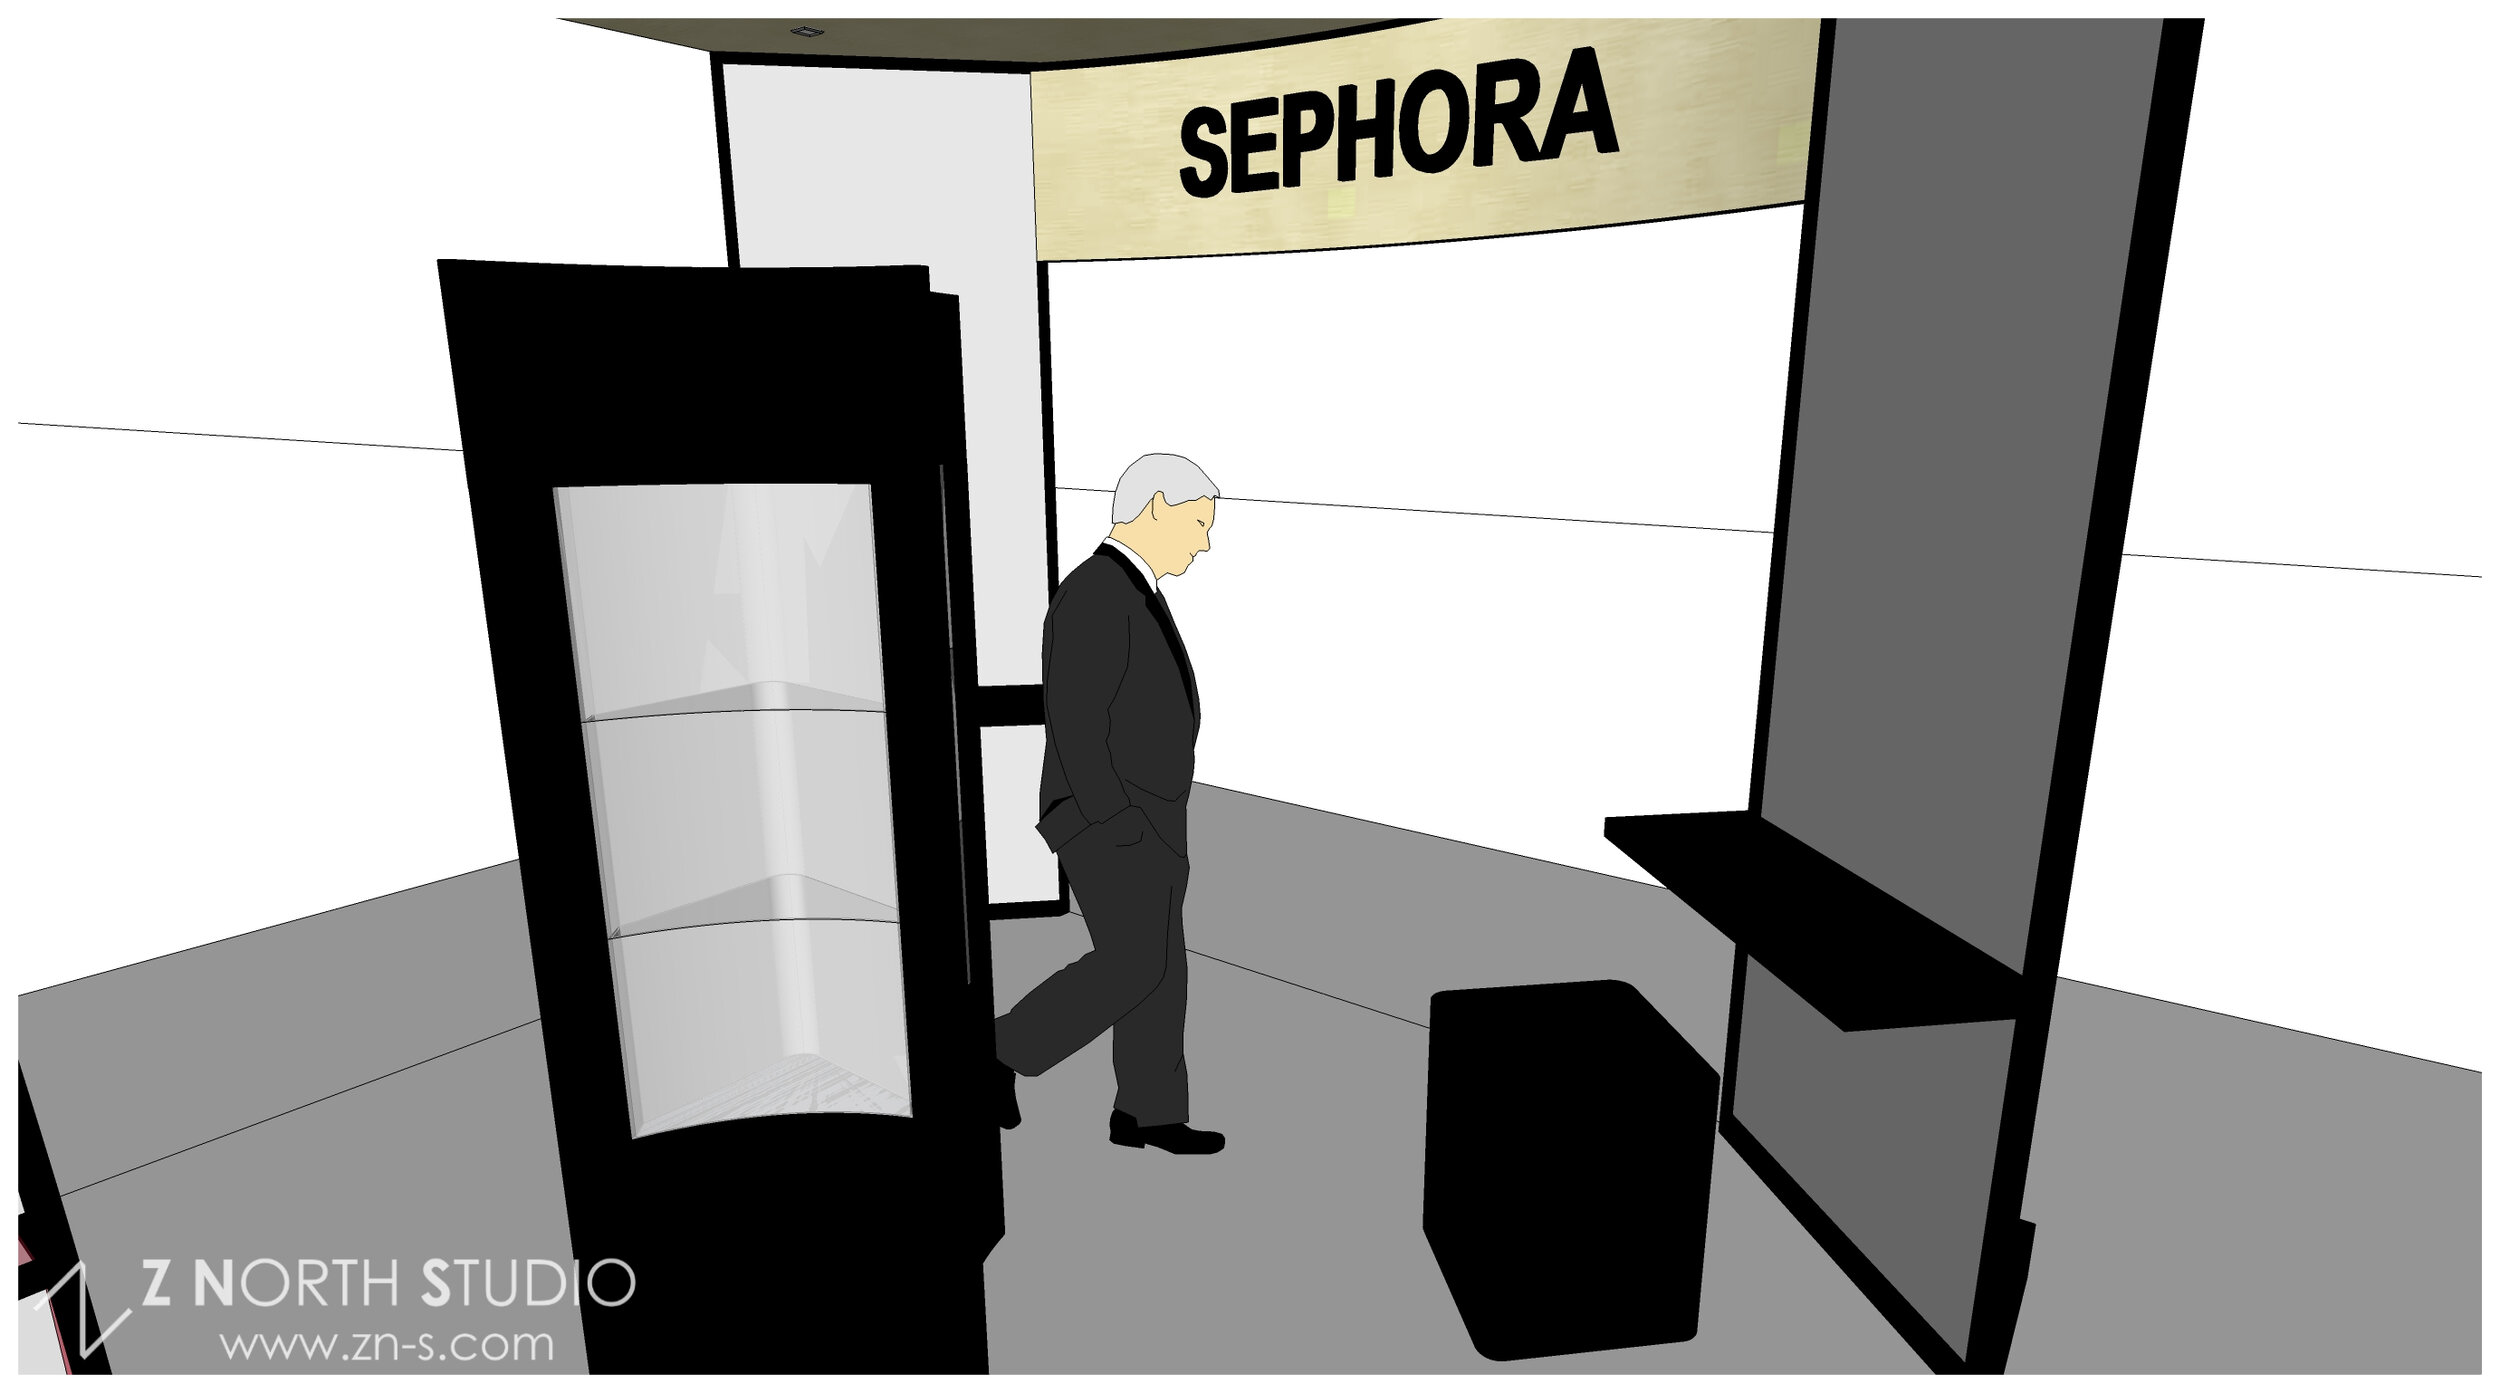 SEPHORA - www.sephora.com - Interior design by Z North Studio (13).jpg